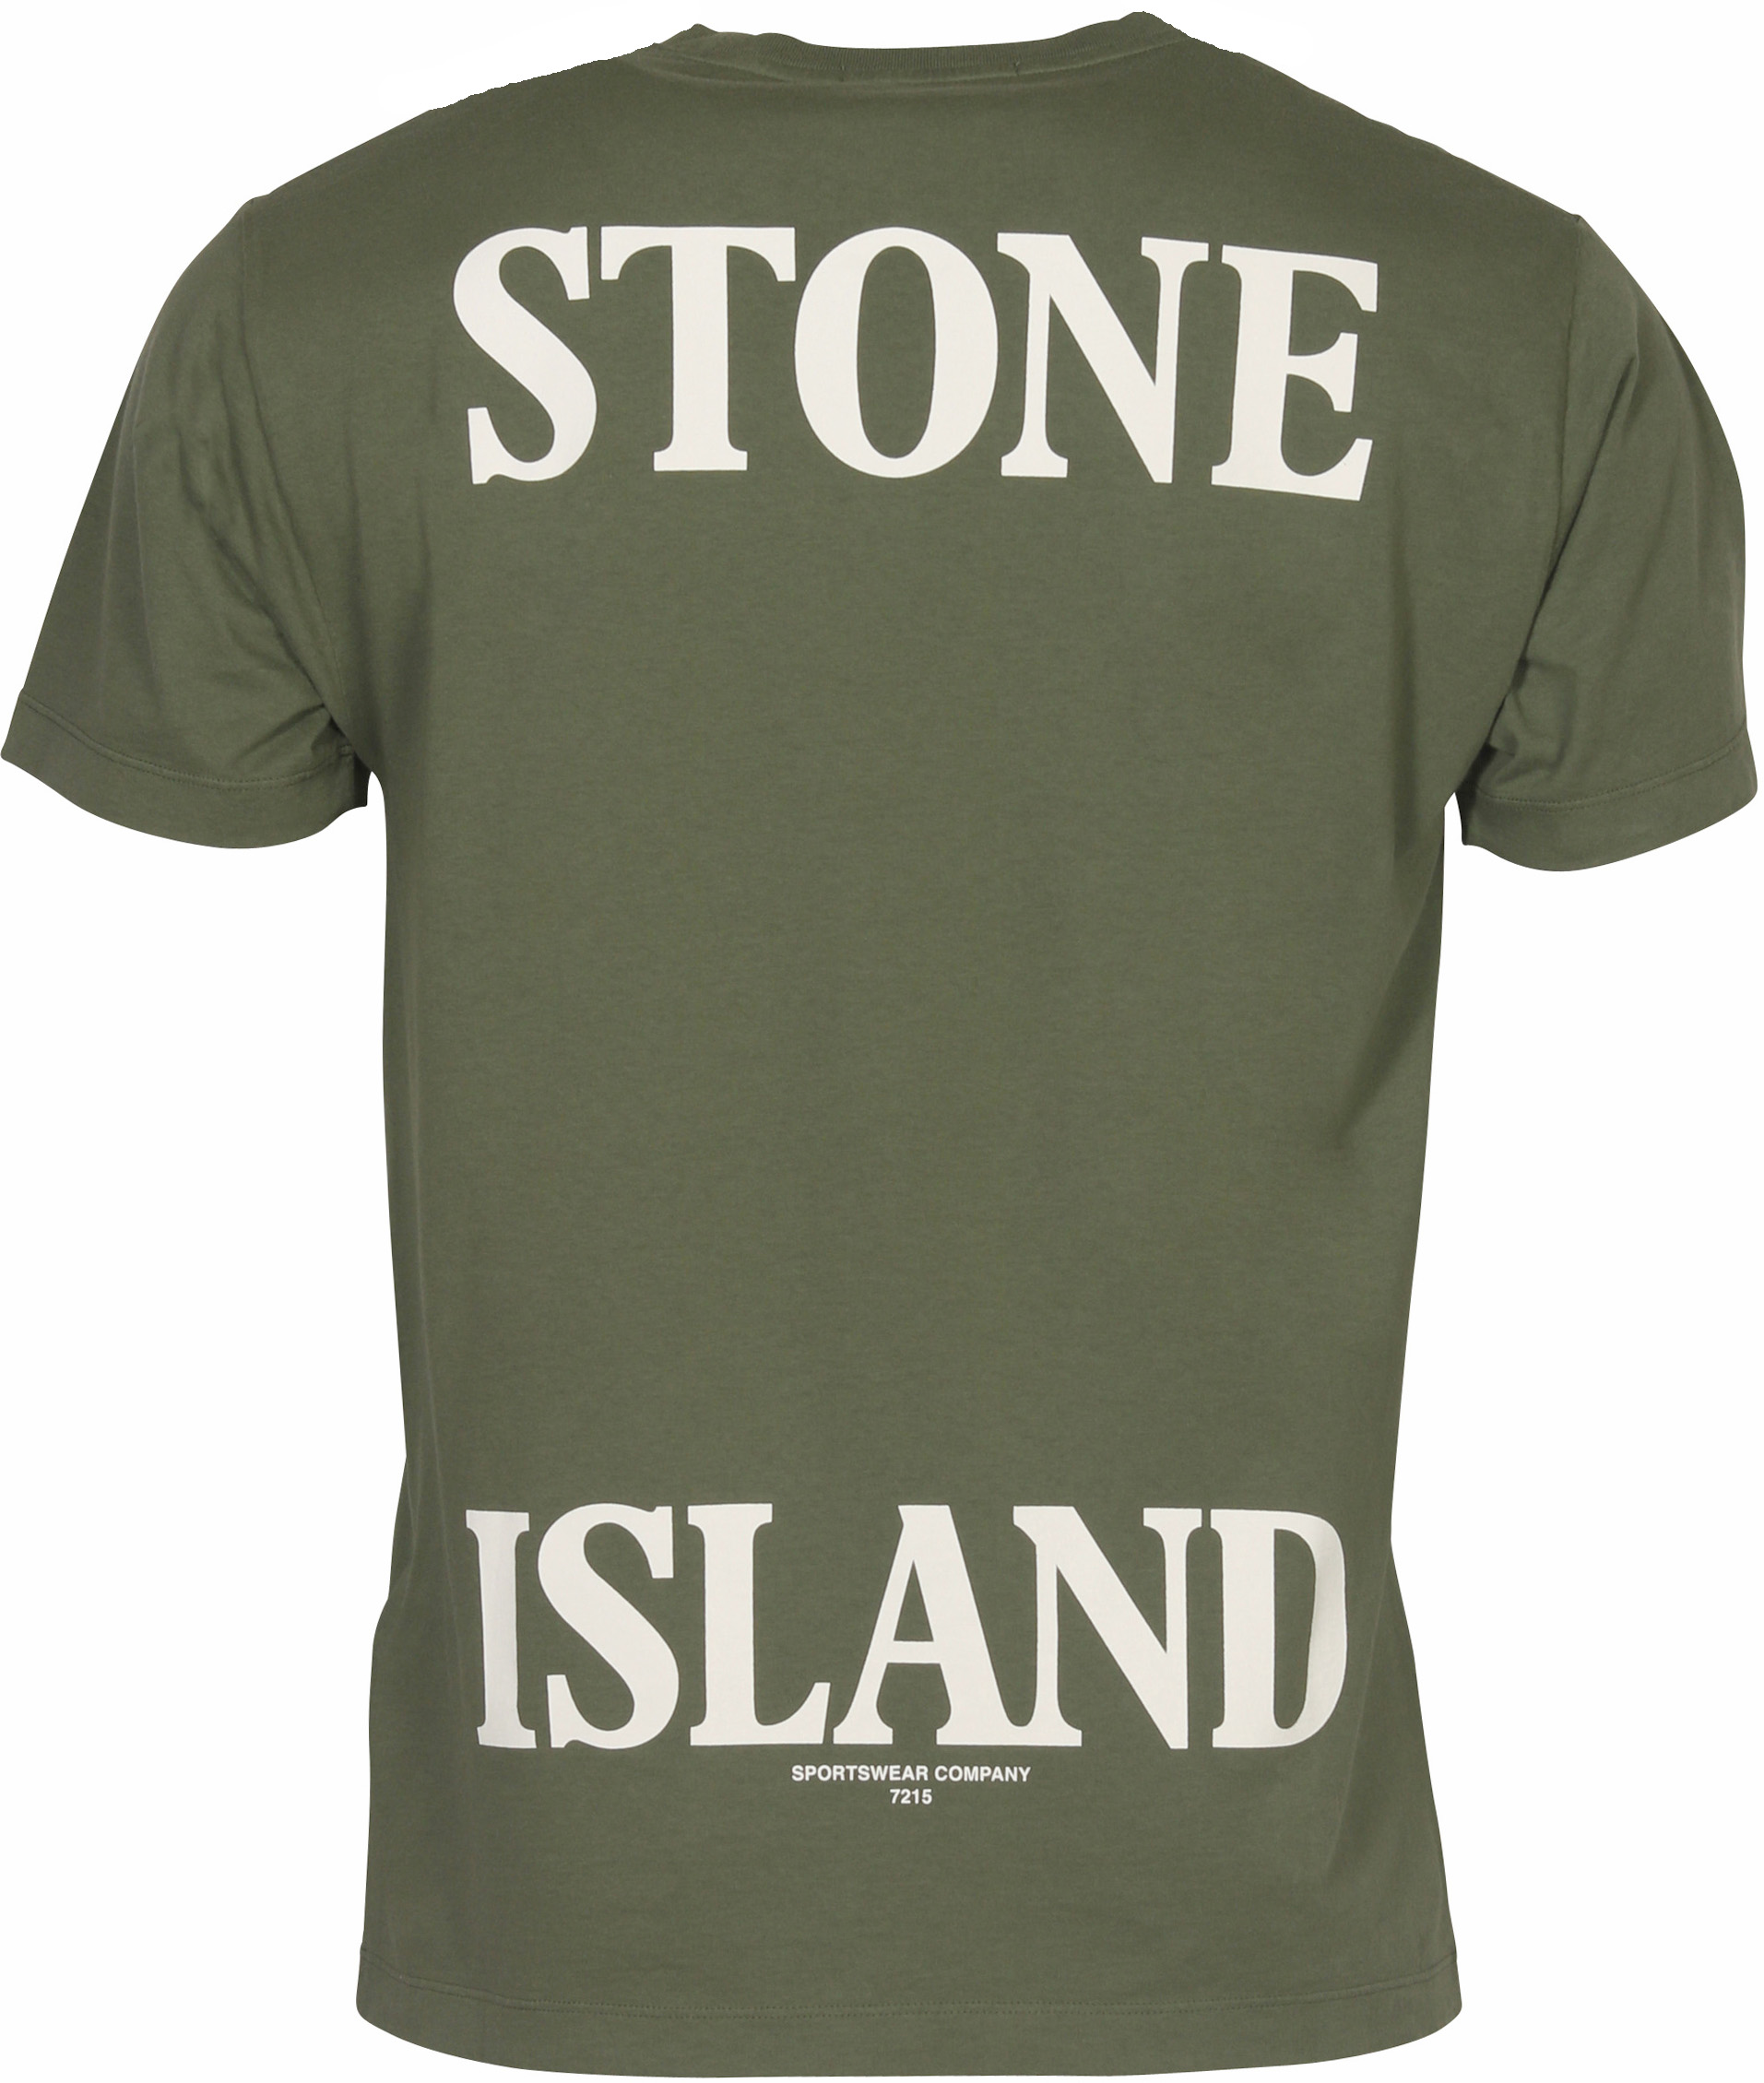 Stone Island T-Shirt Olive Stitched XL